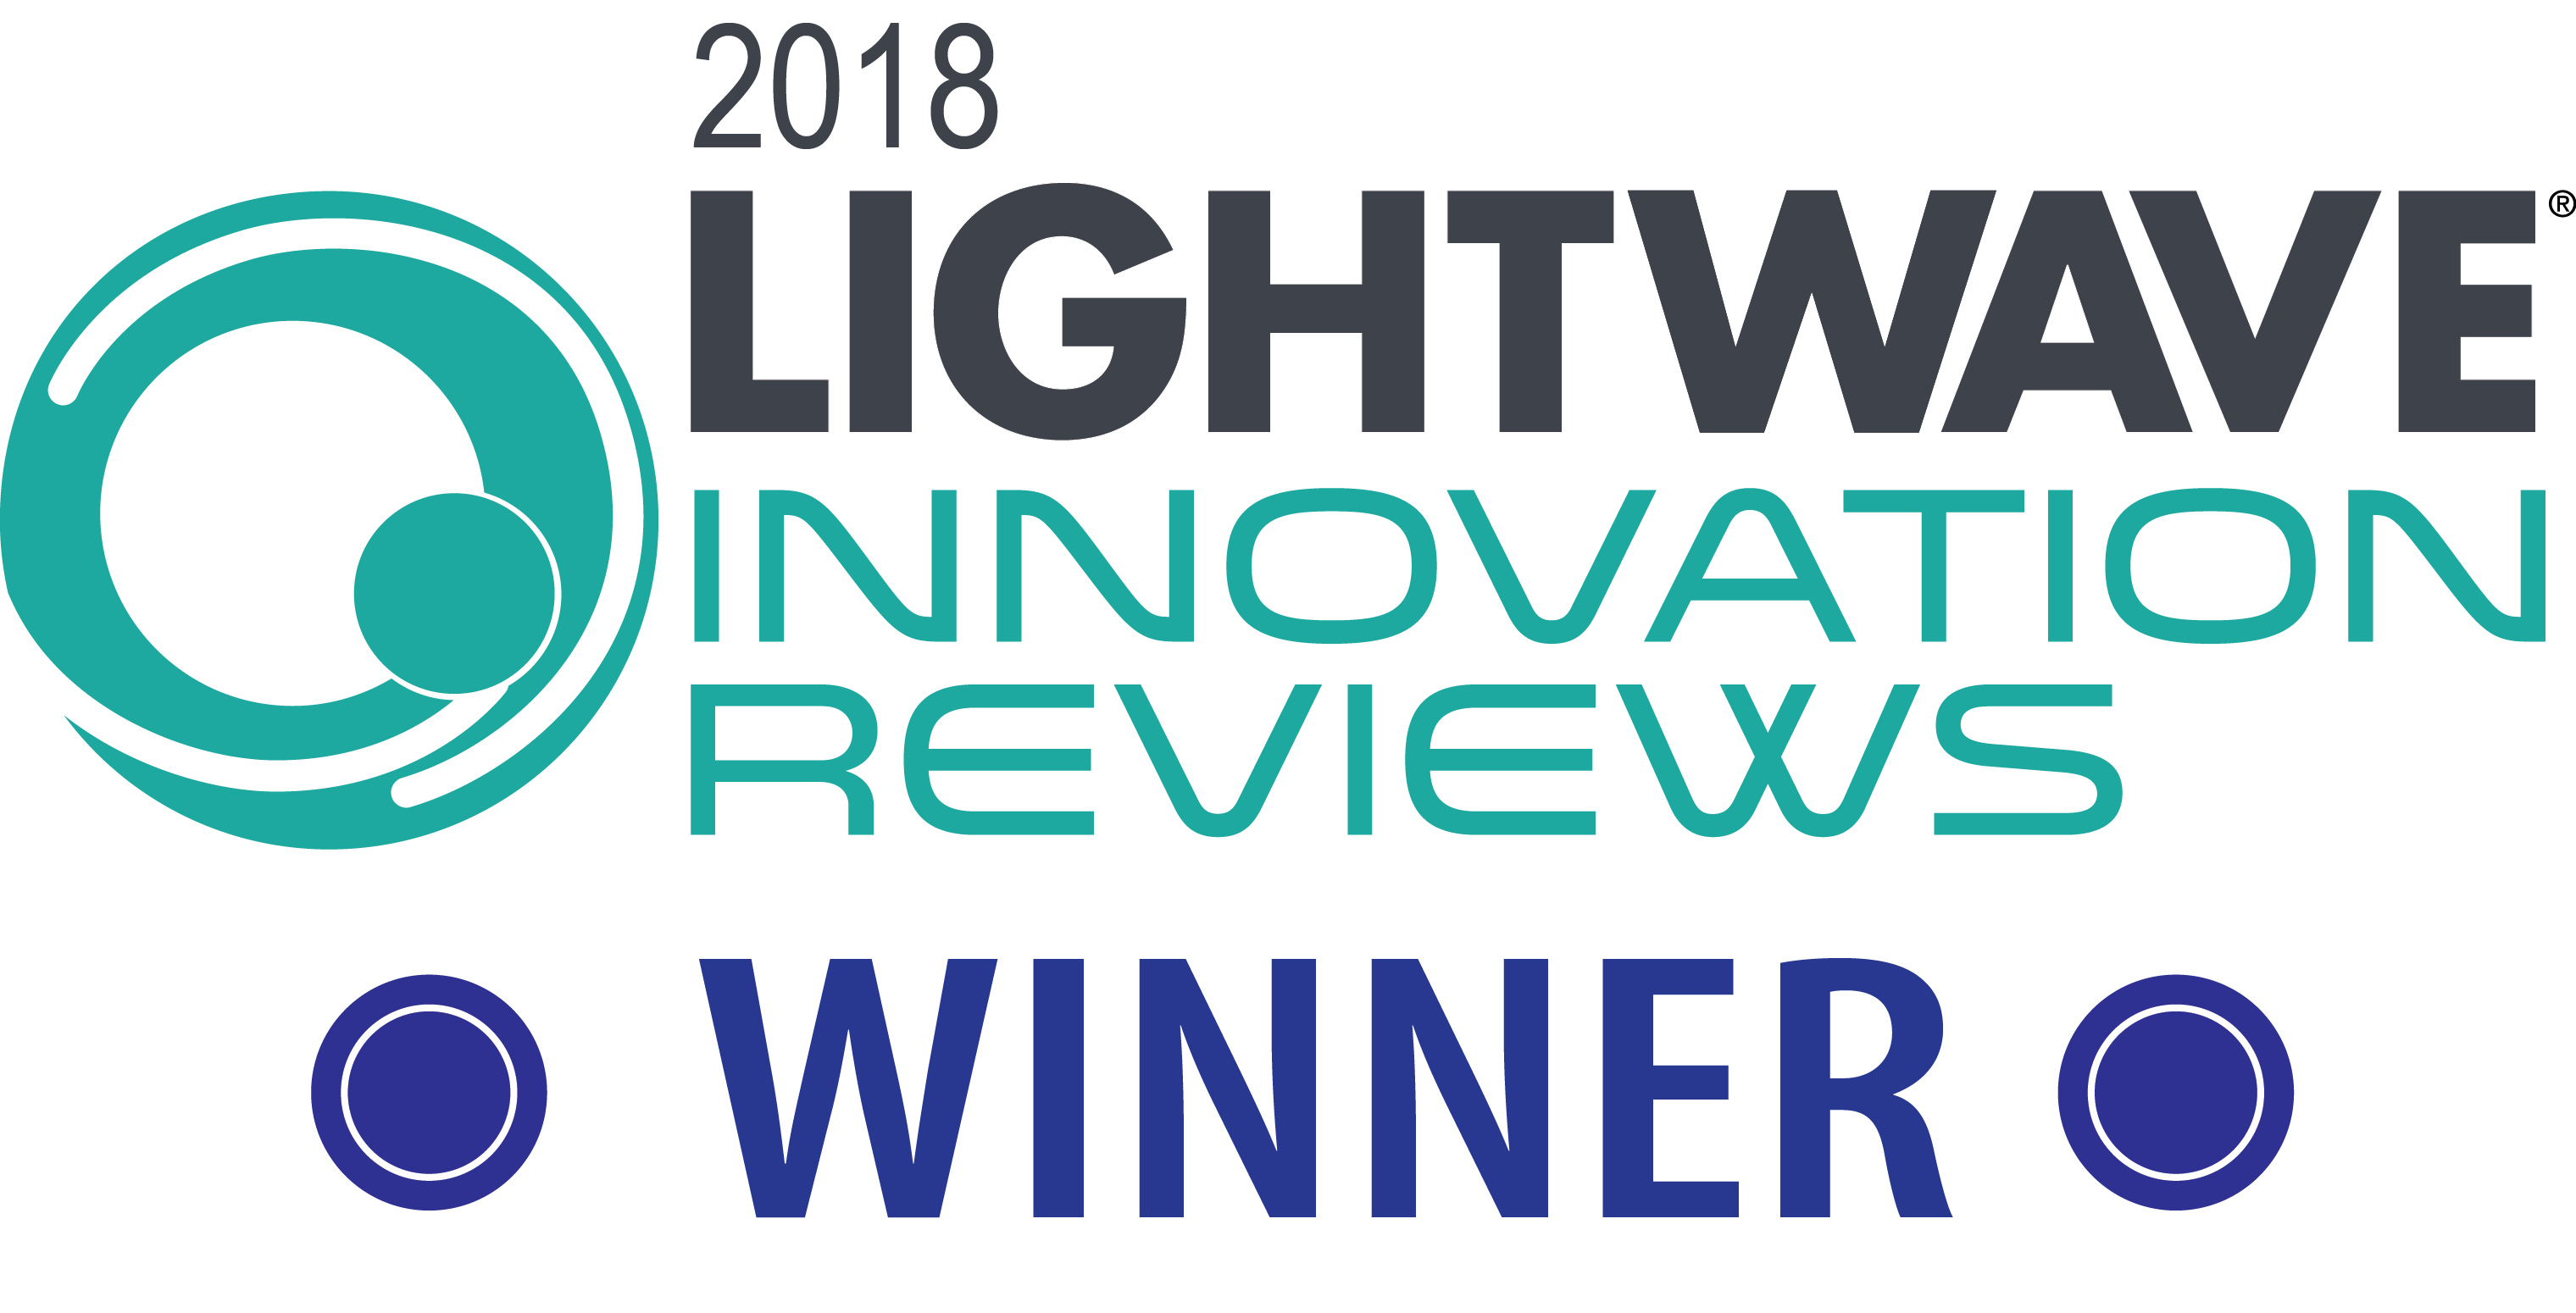 Lightwave Innovation Review Winner 2018